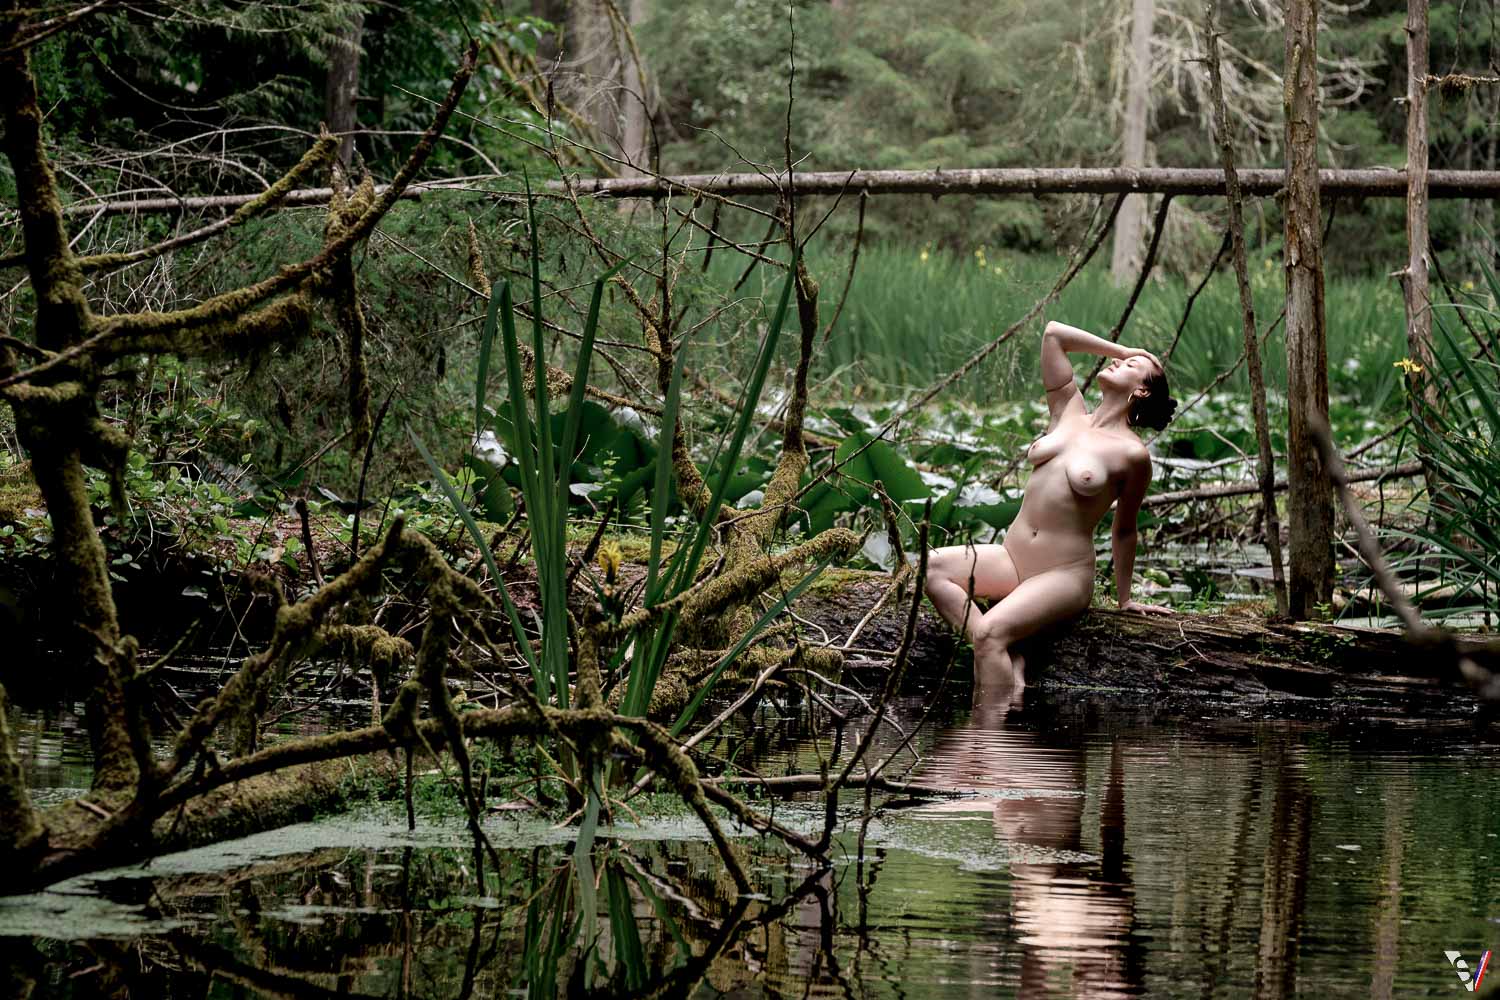 Fine nude art into the swamp.